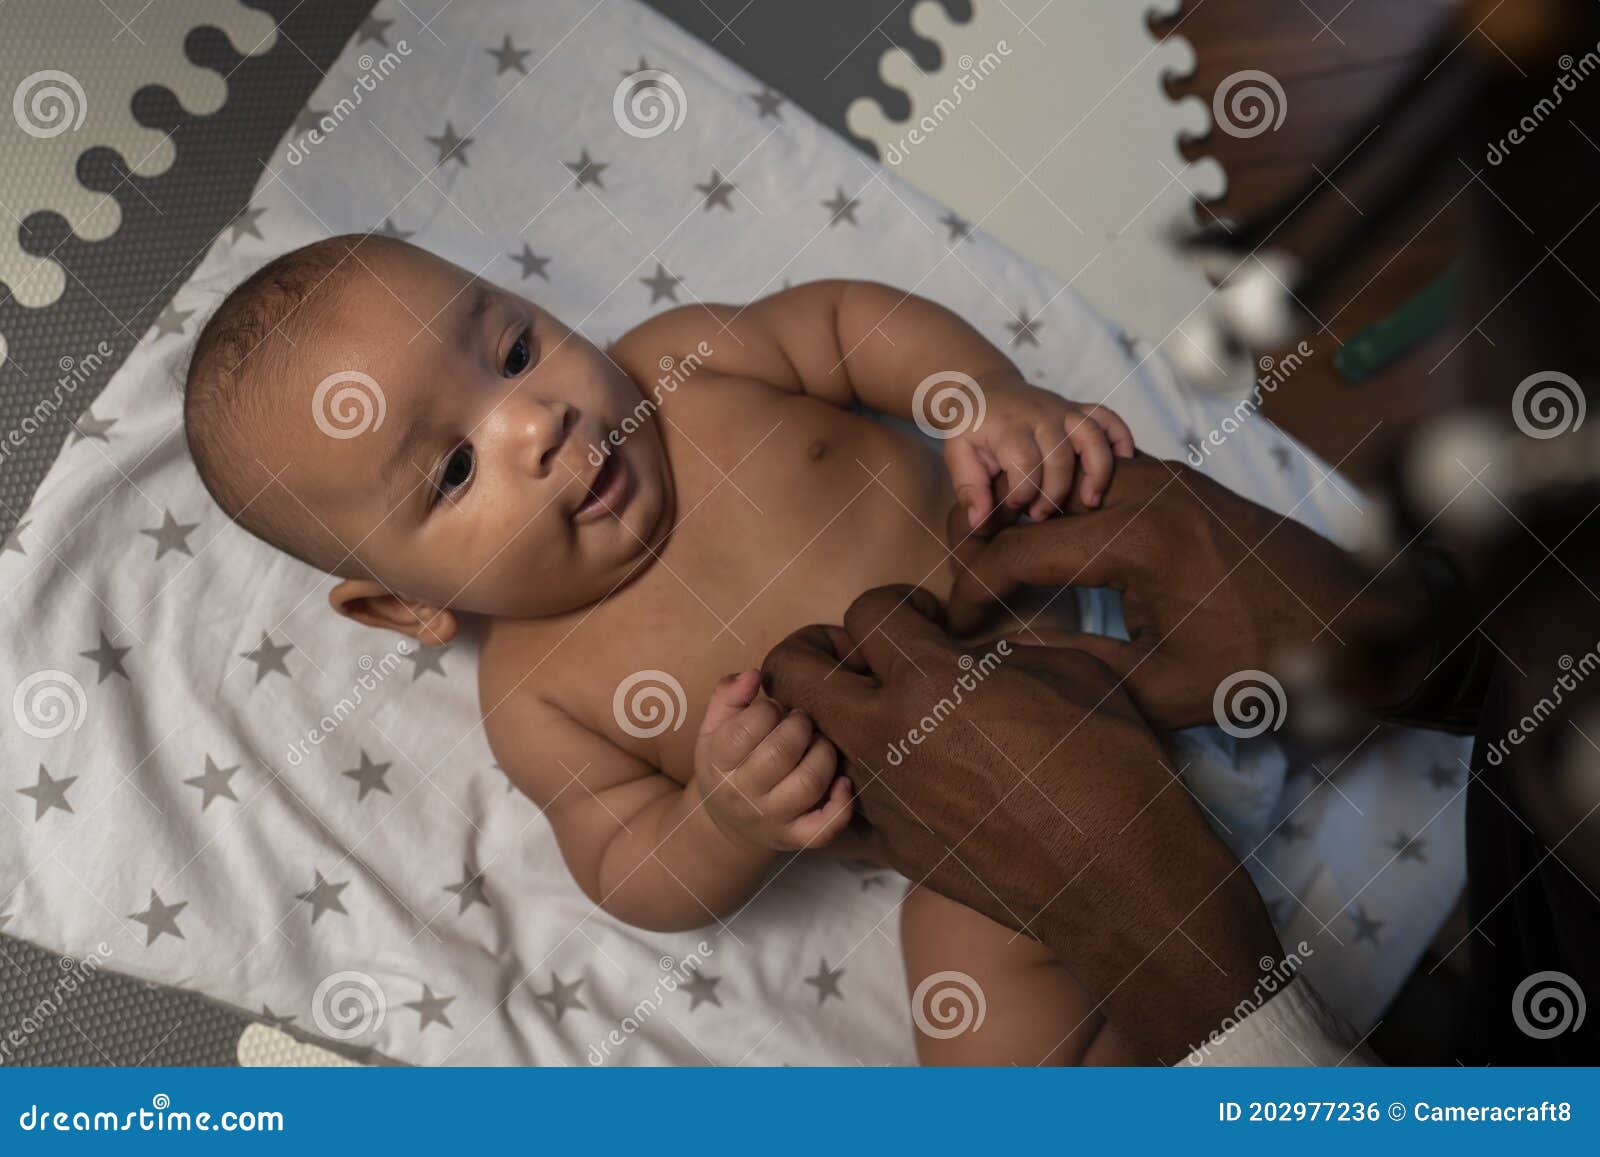 newborn boy diaper change